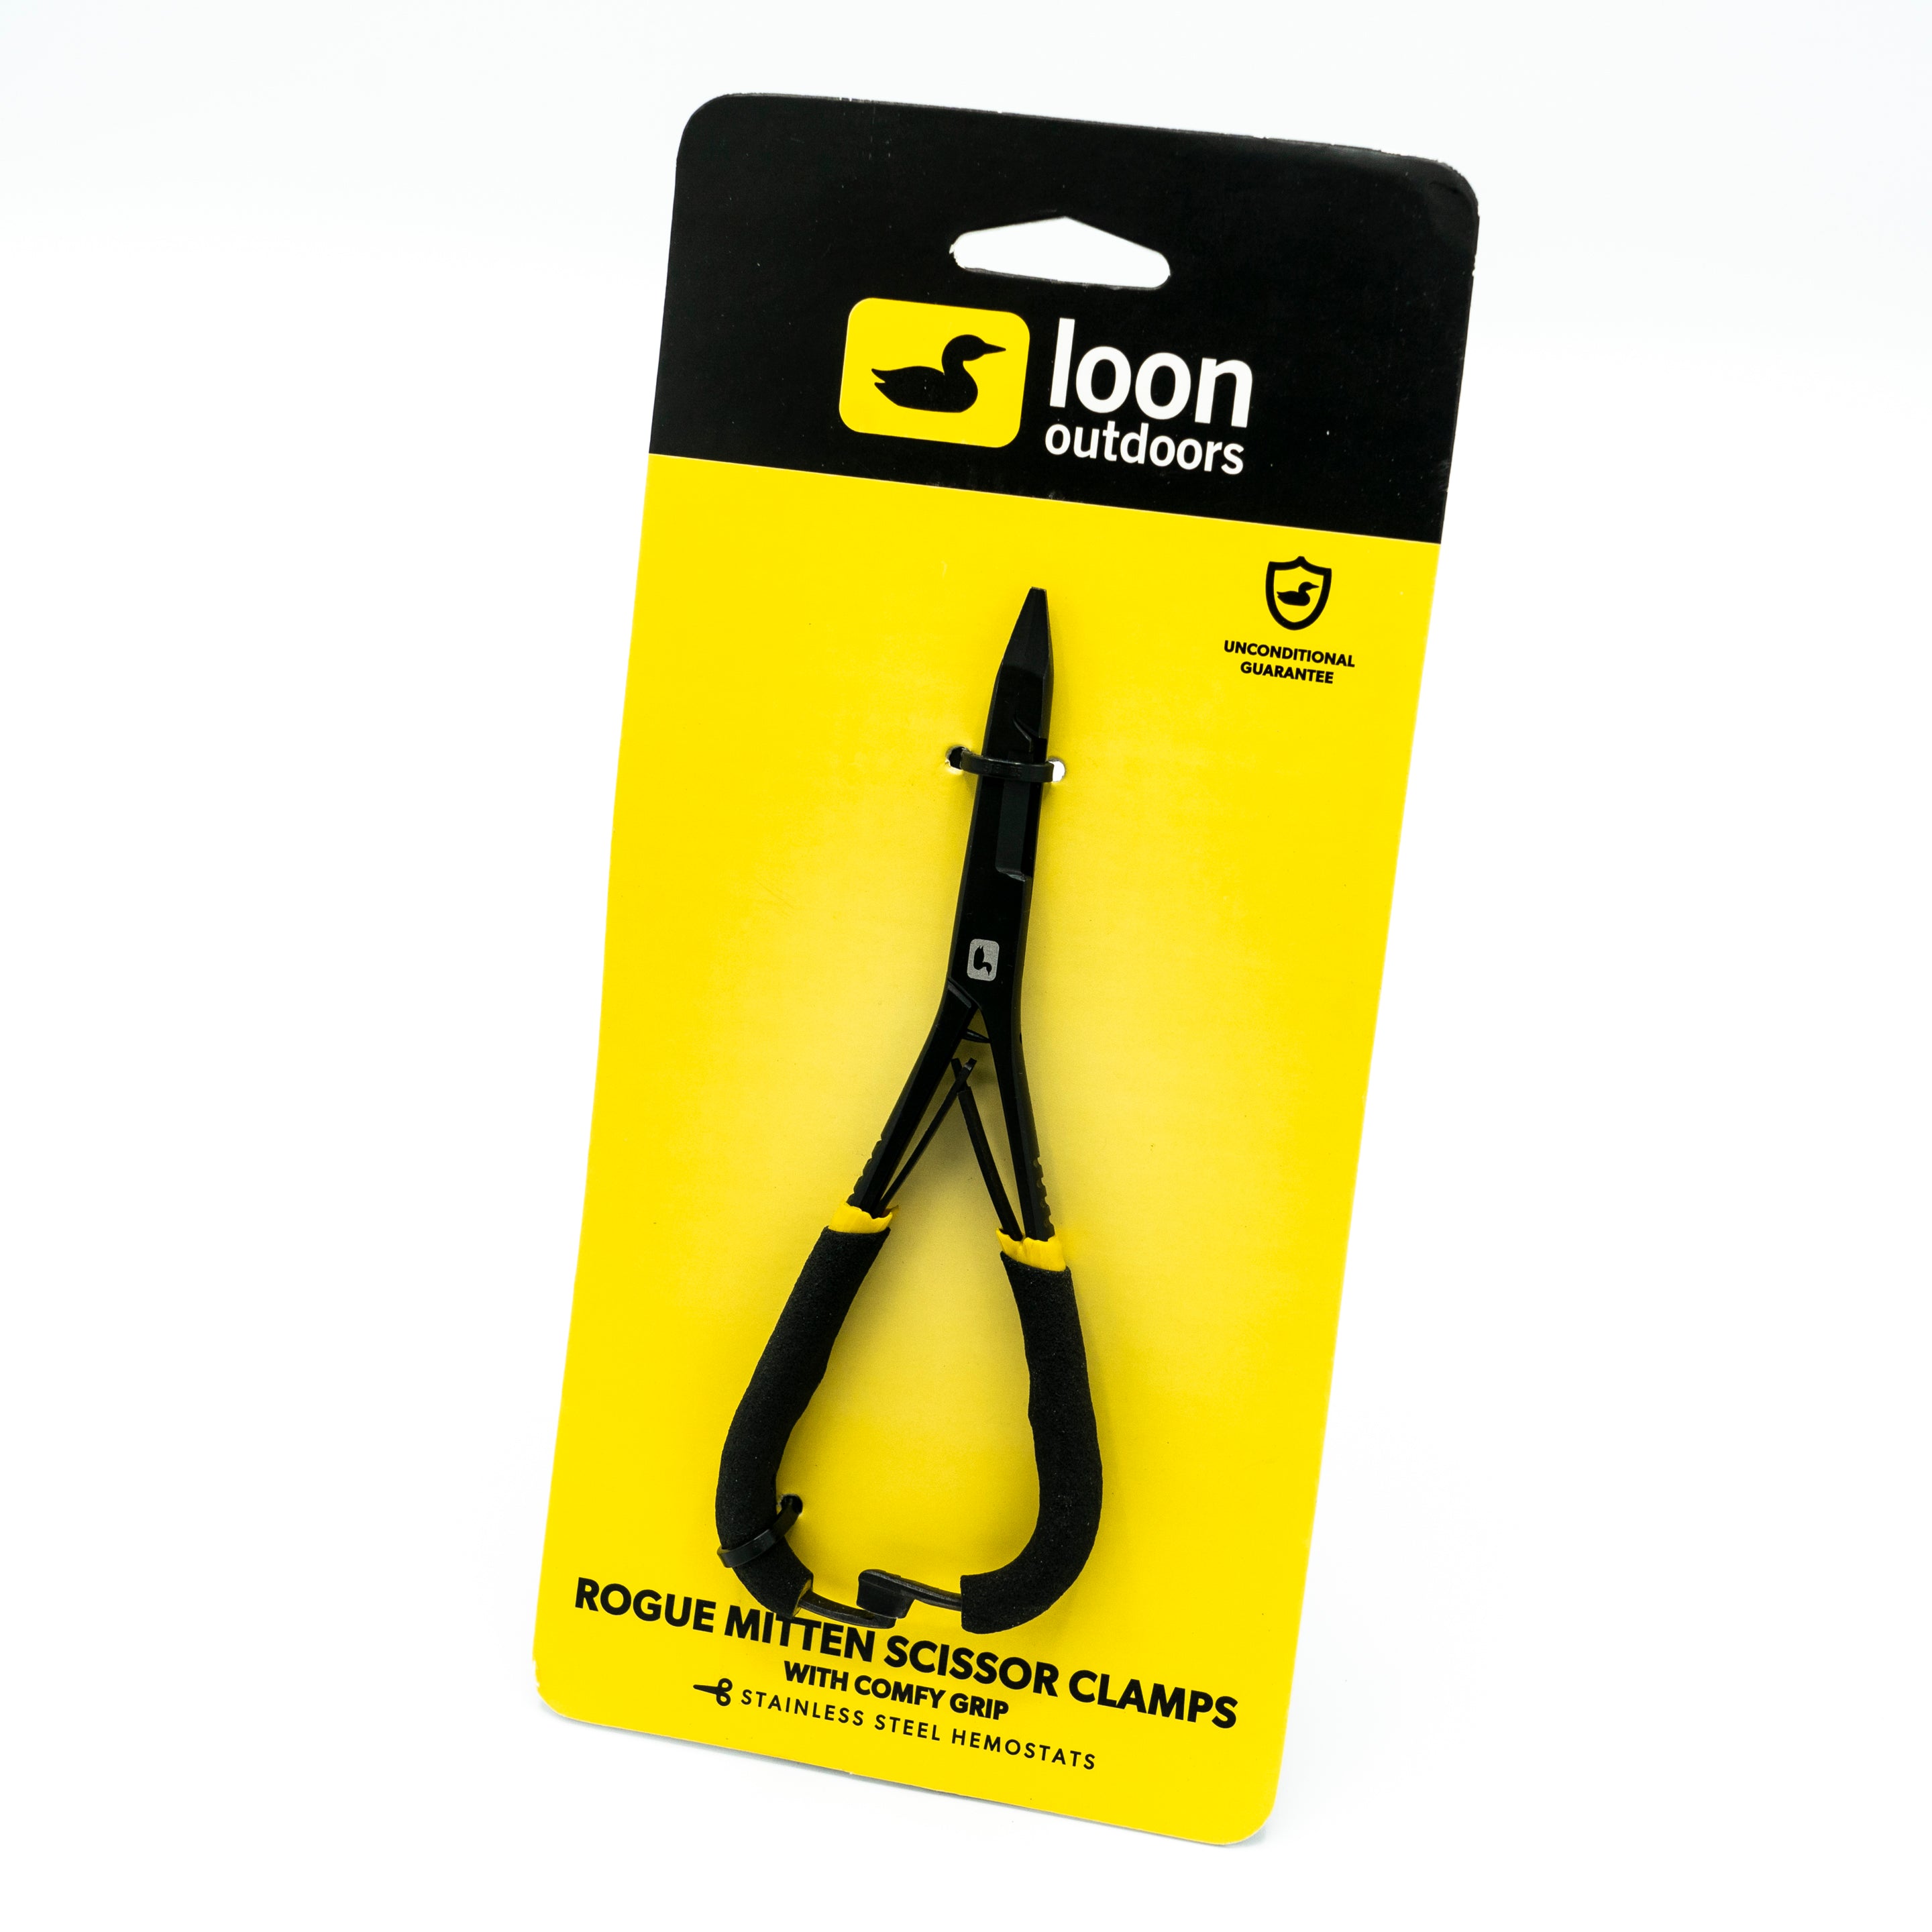 Loon Outdoors Rogue Mitten Scissor Clamps w/ Comfy Grip